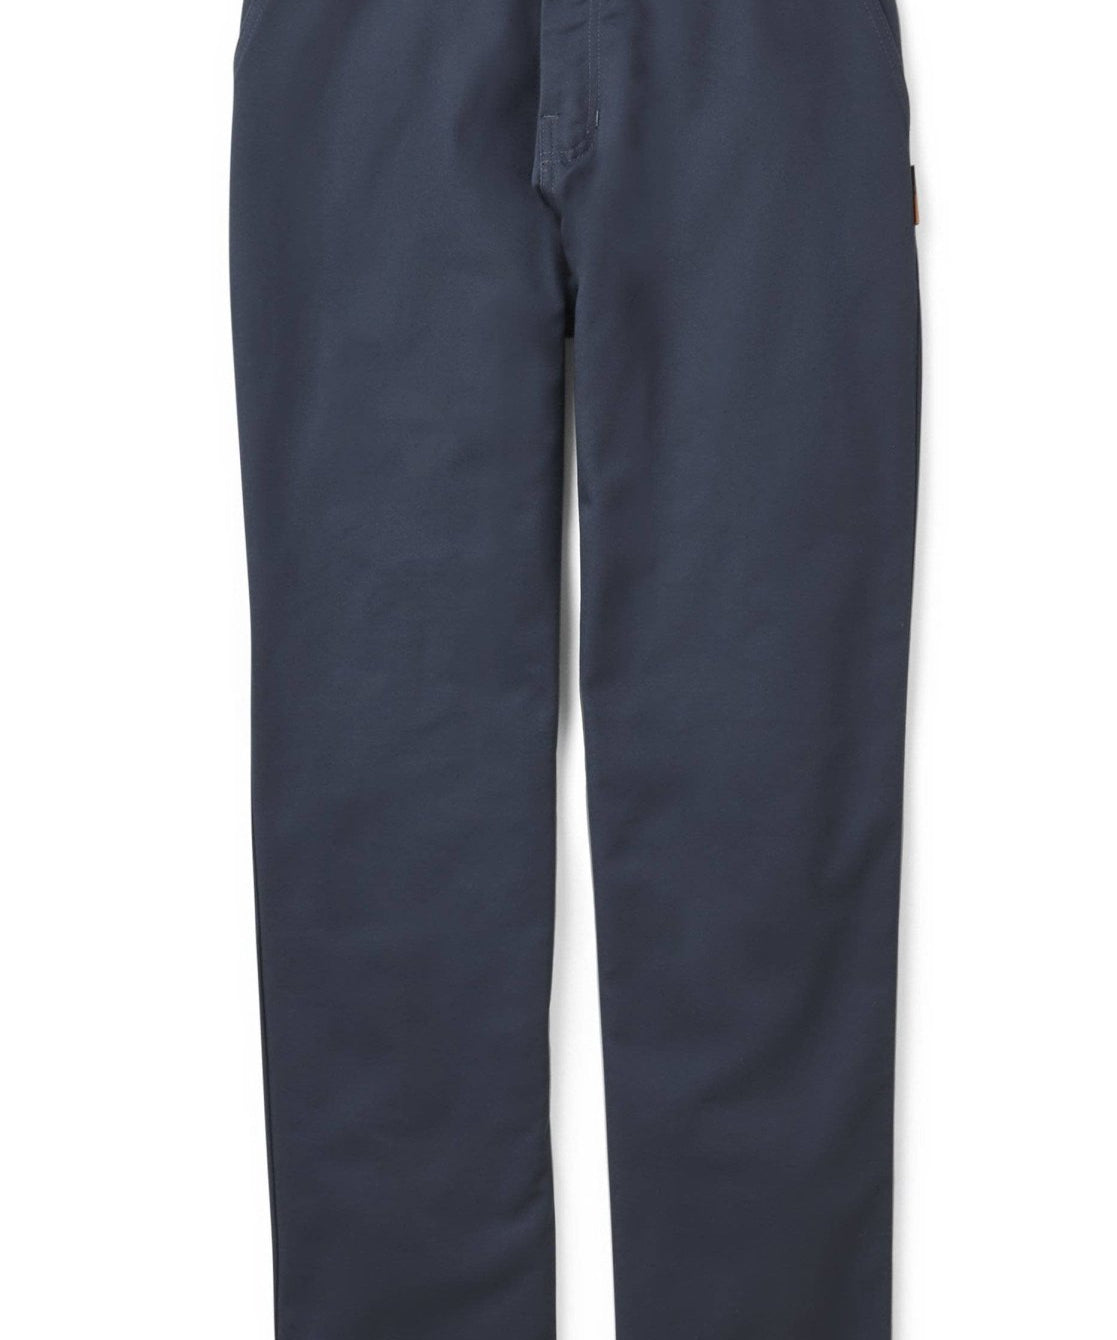 FR 88/12 Uniform Pants - Charcoal - Rasco FR